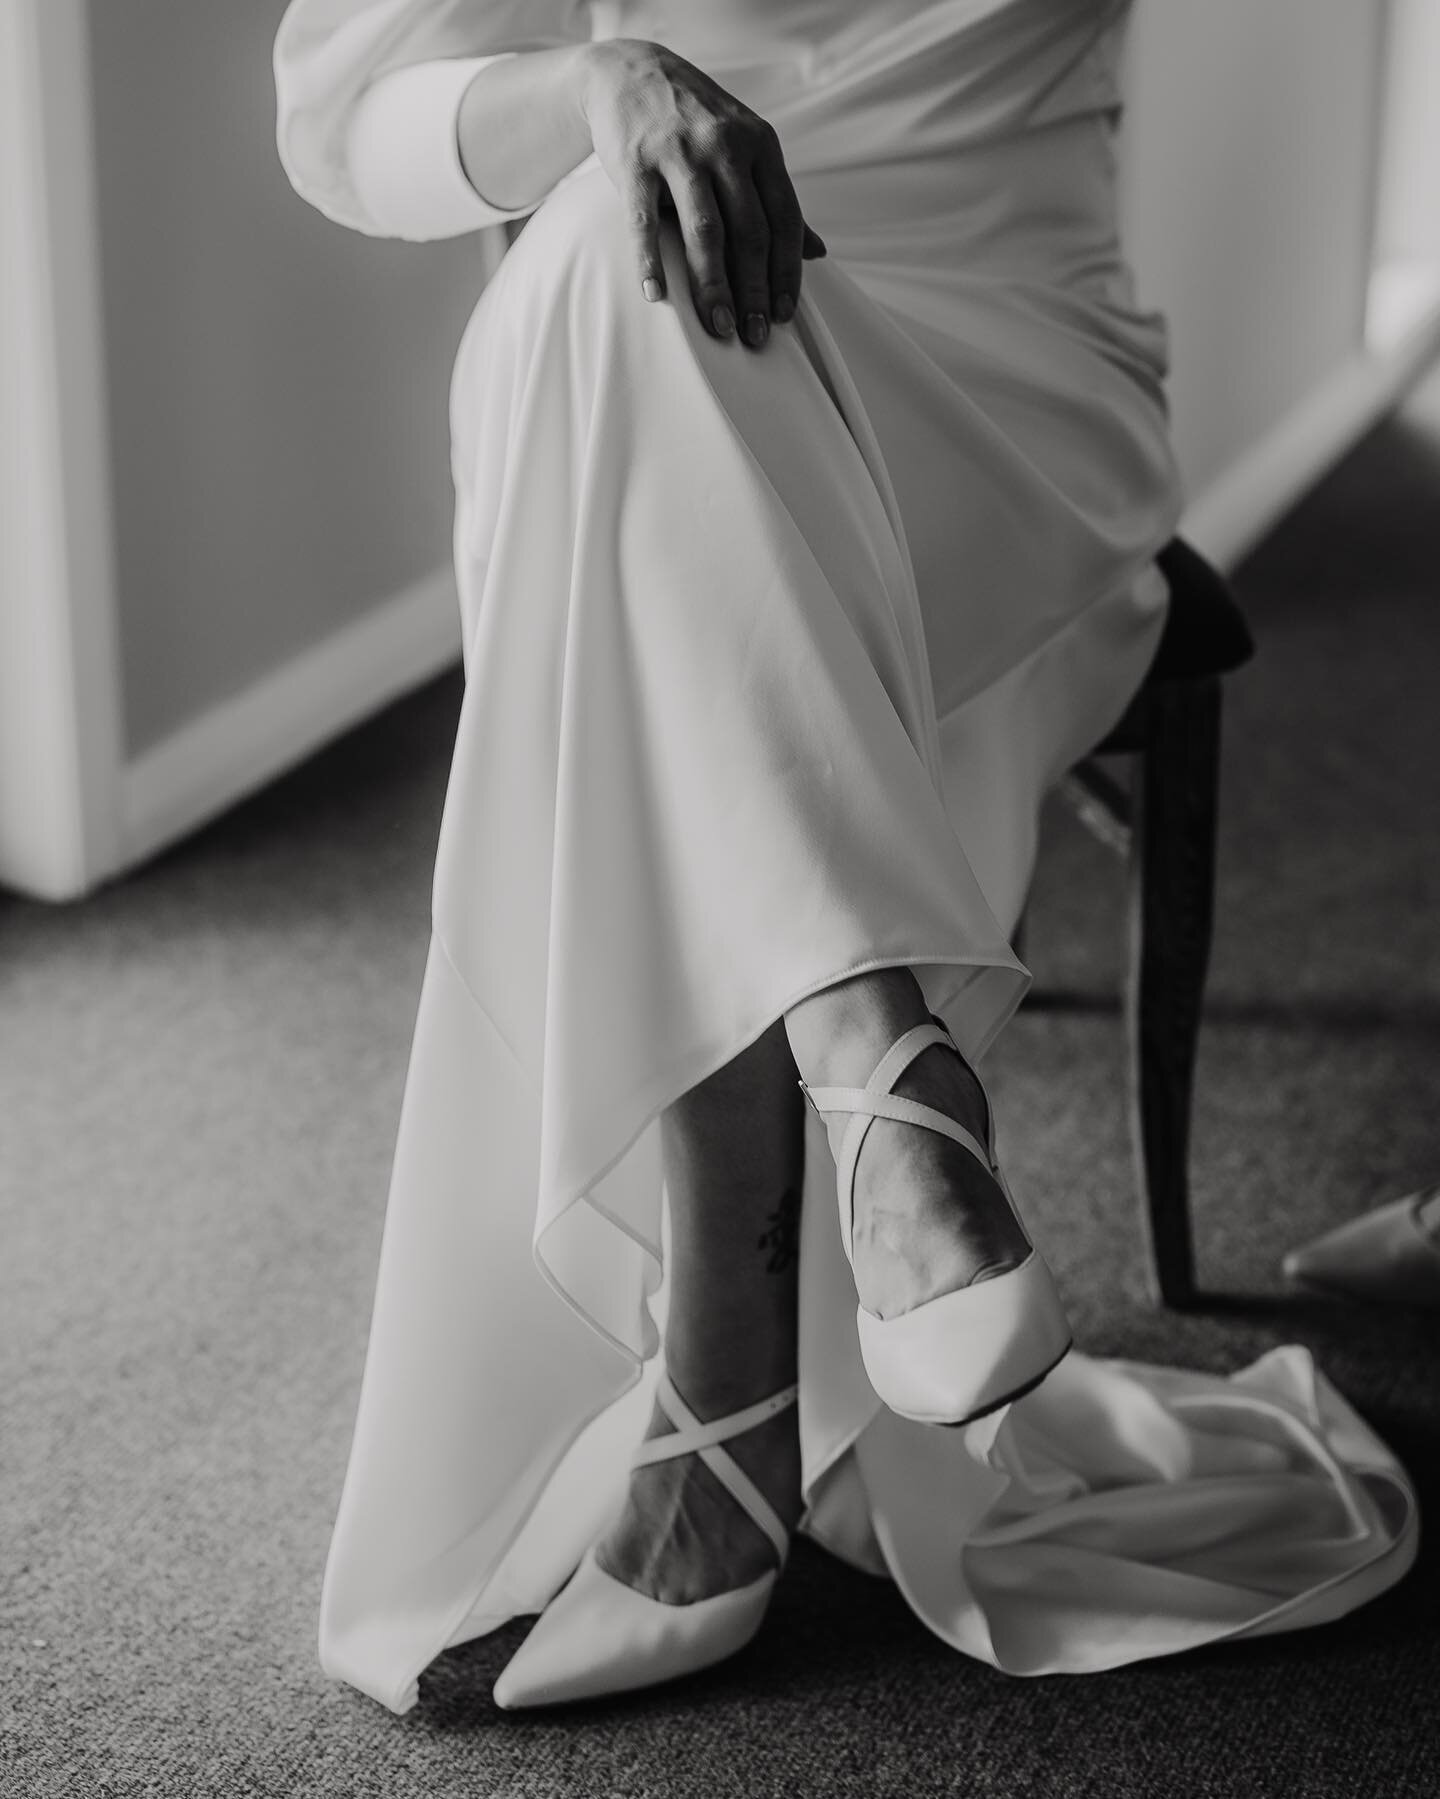 Angelina&rsquo;s details x 
.
.
.
#weddingshoes #weddingdetails #nzweddings #nzweddingphotographer #aucklandweddings #weddingcouture #togetherjournal #weddinginspo #aucklandweddingphotographer #nzbride #realwedding